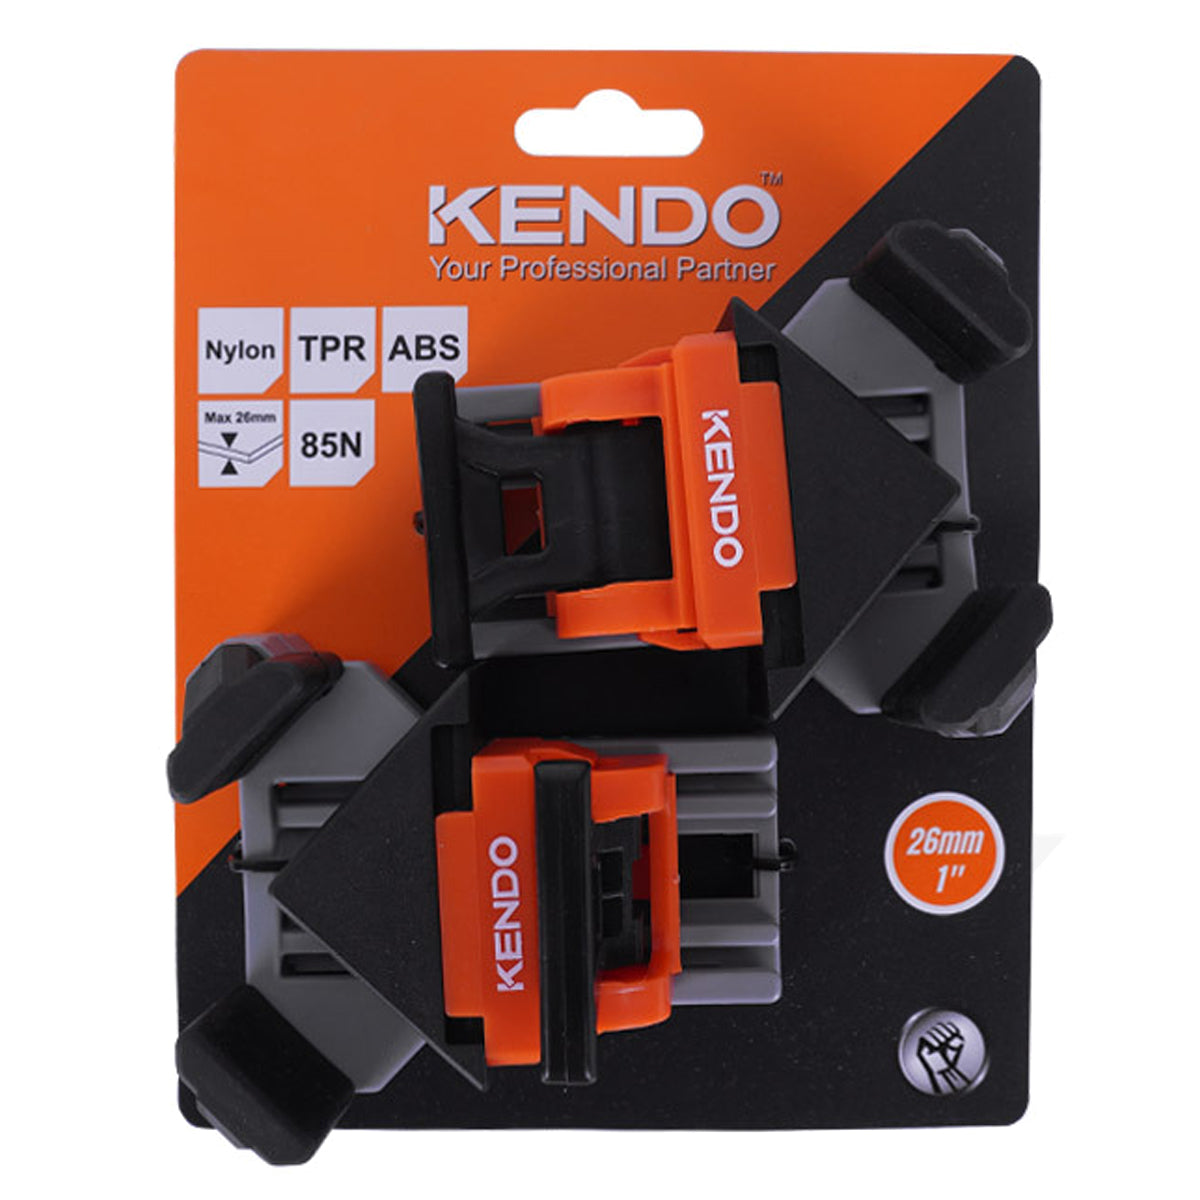 Kendo 26mm Corner Clamps 2 Piece